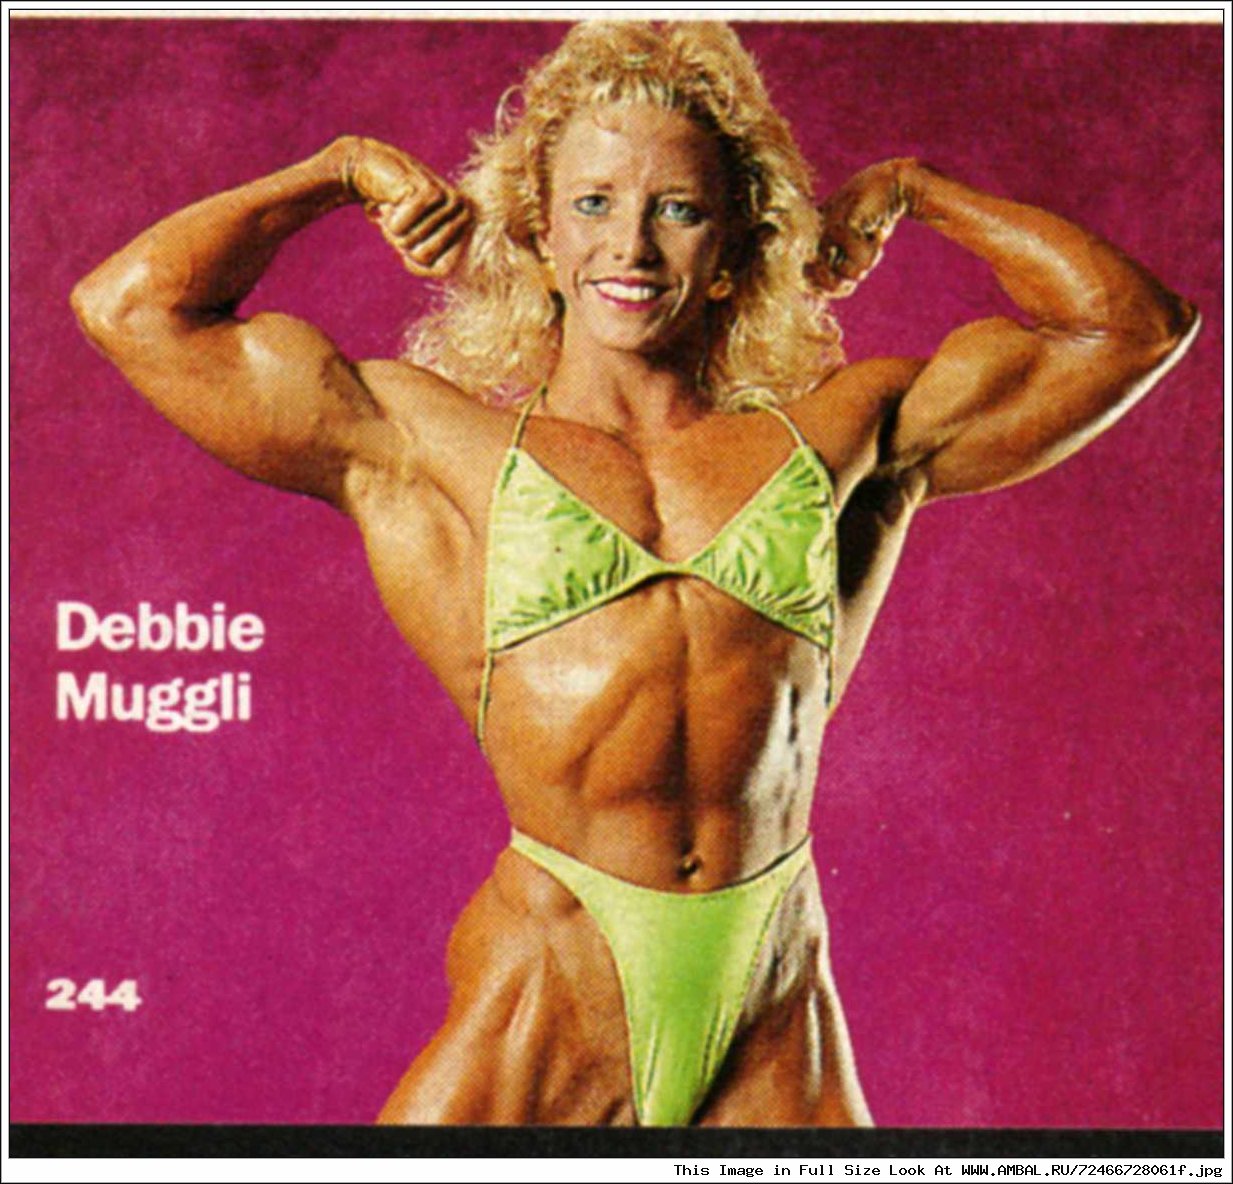 Debbie the come lady images